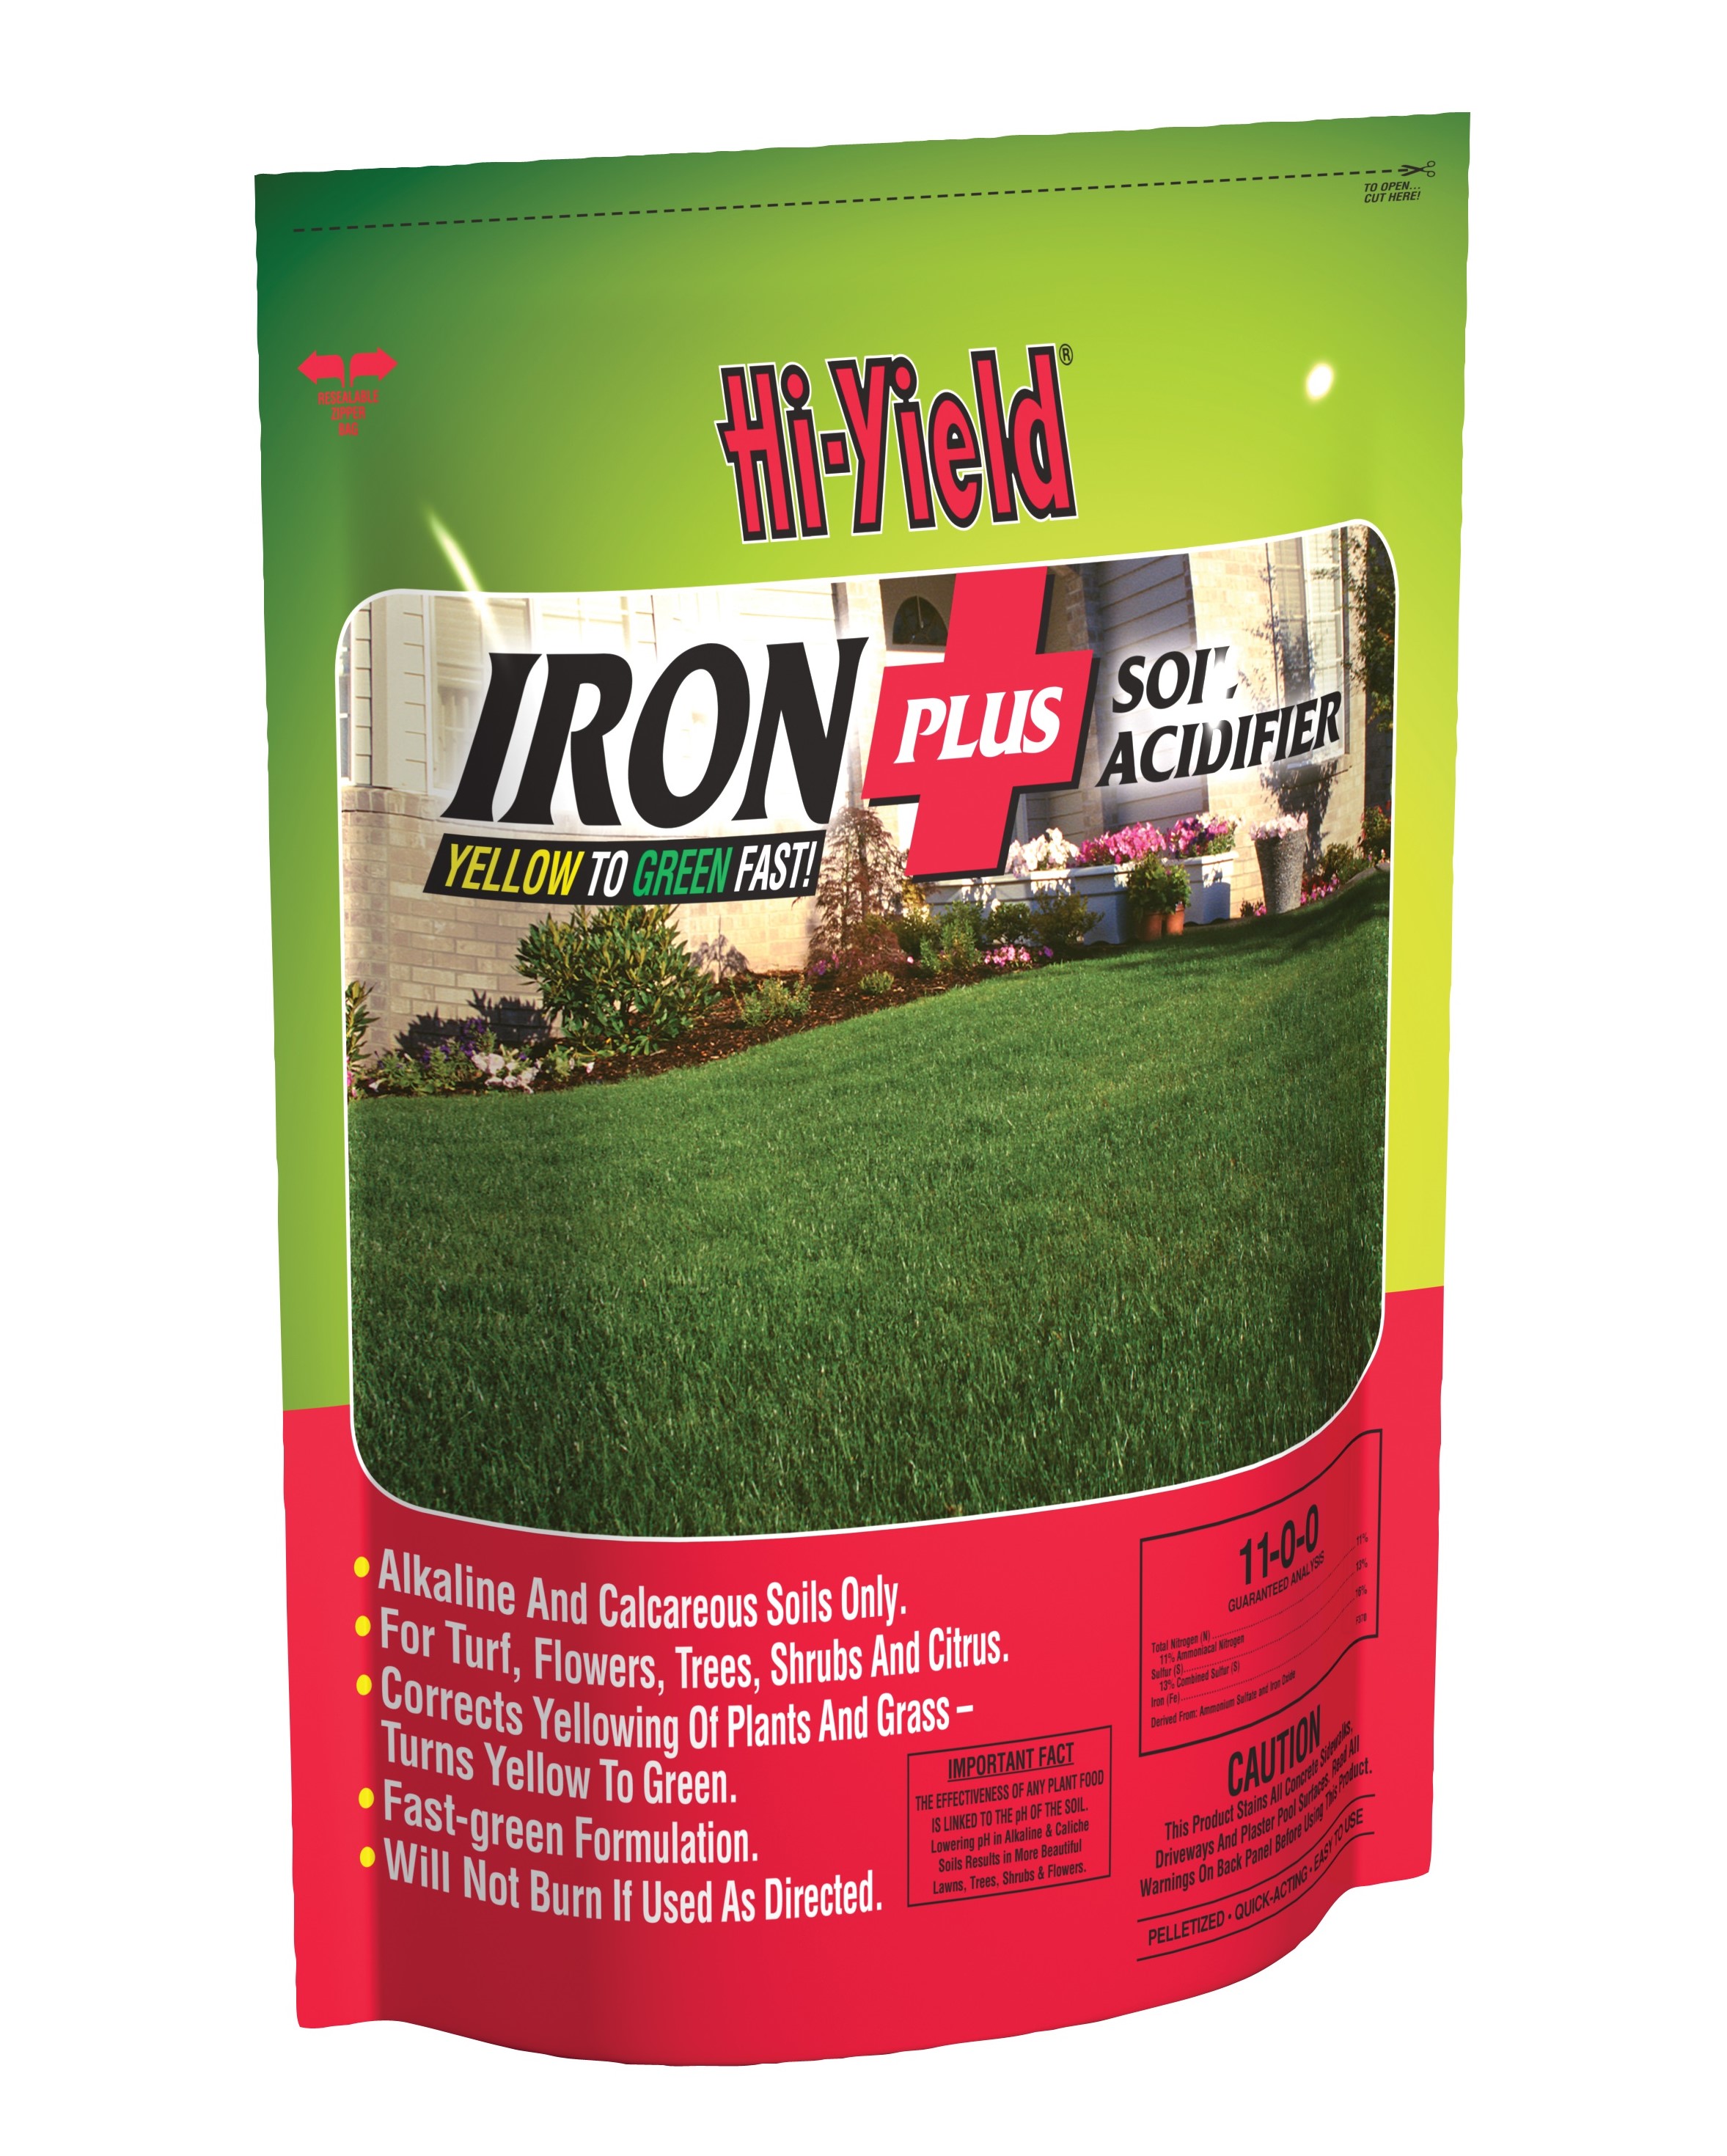 Hi-Yield Iron Plus Soil Acidifier 4#